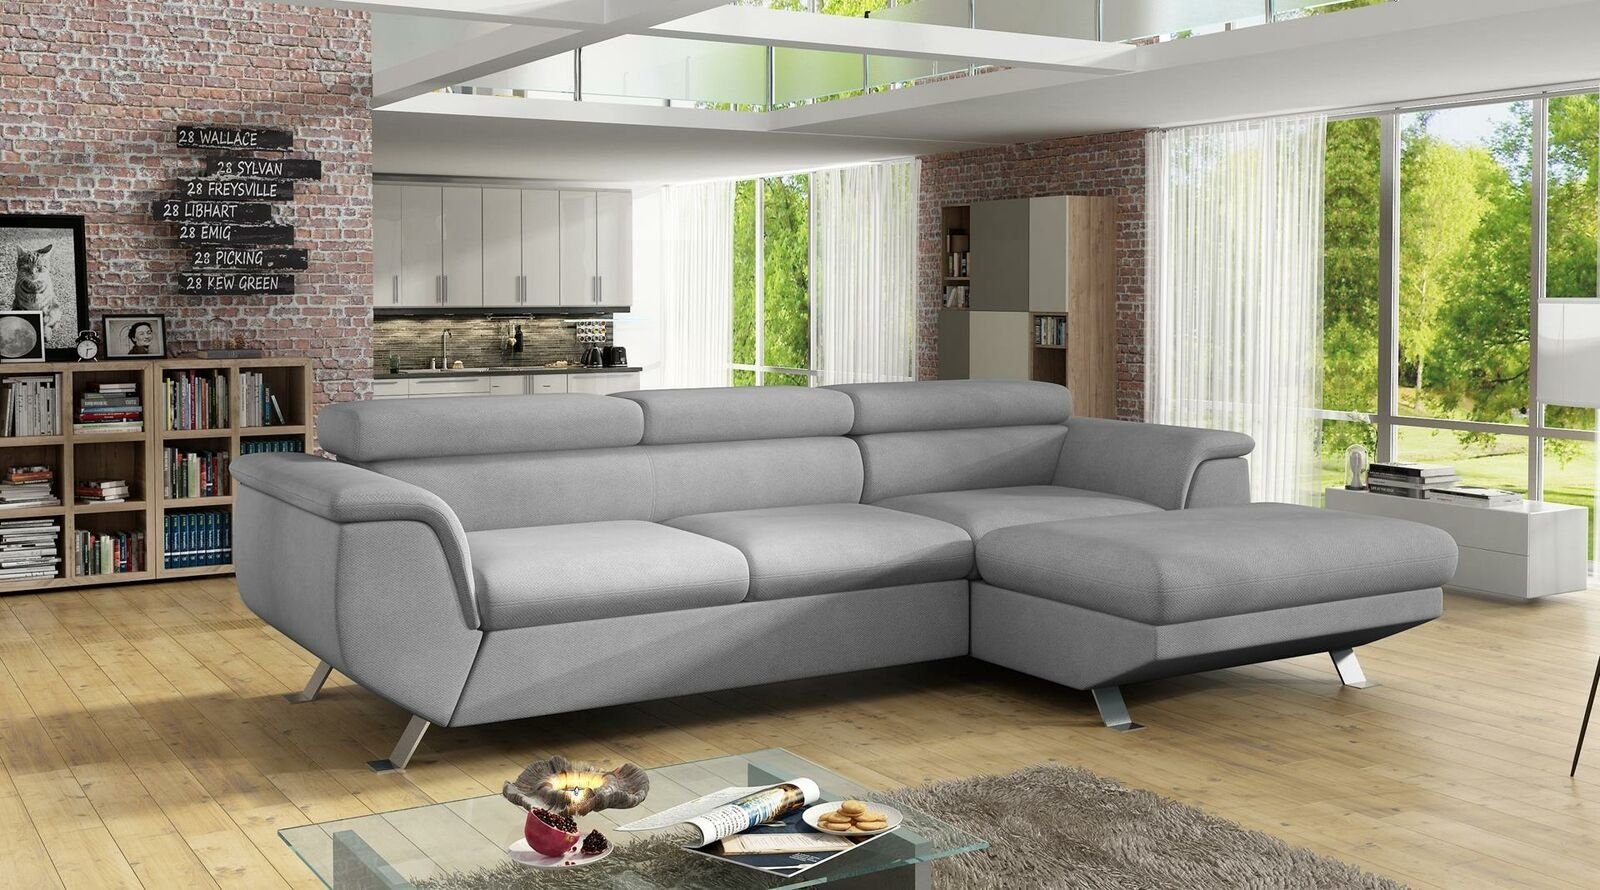 Bettfunktion Sofa Couch Ecksofa Eckcouch Polster Ecke Stoff Textil Couchen Neu 